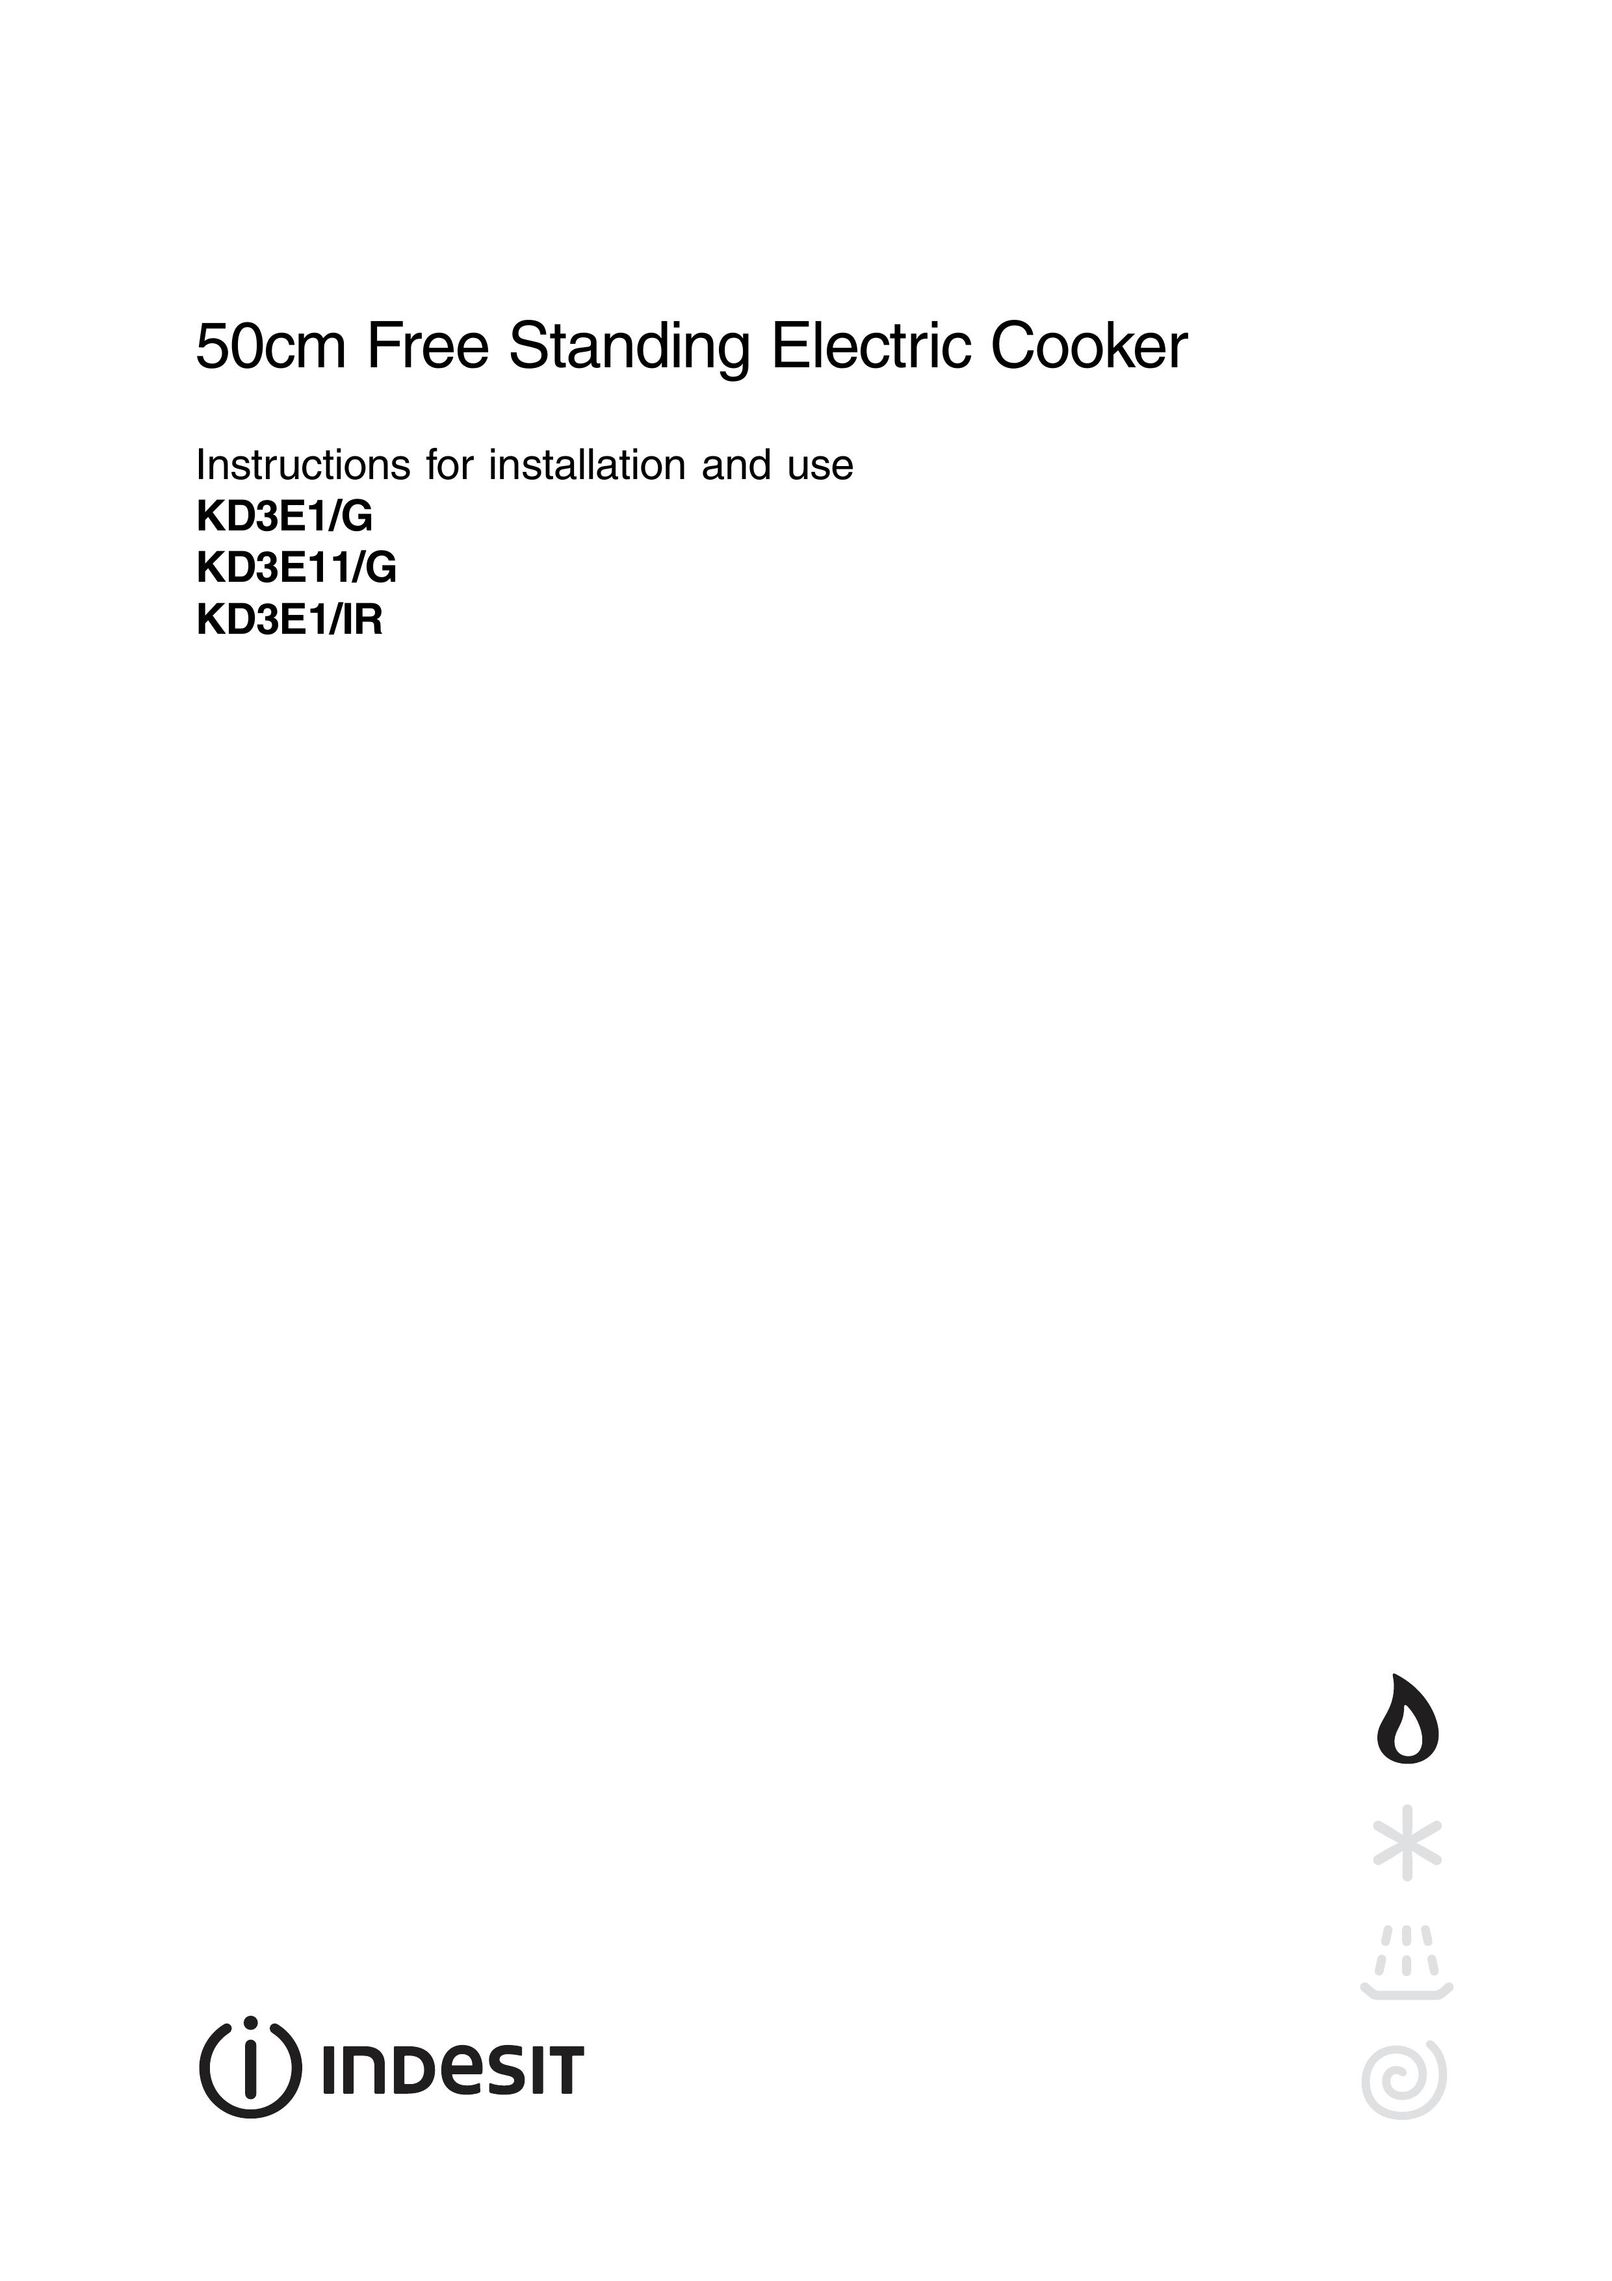 Indesit KD3E11/G Electric Pressure Cooker User Manual